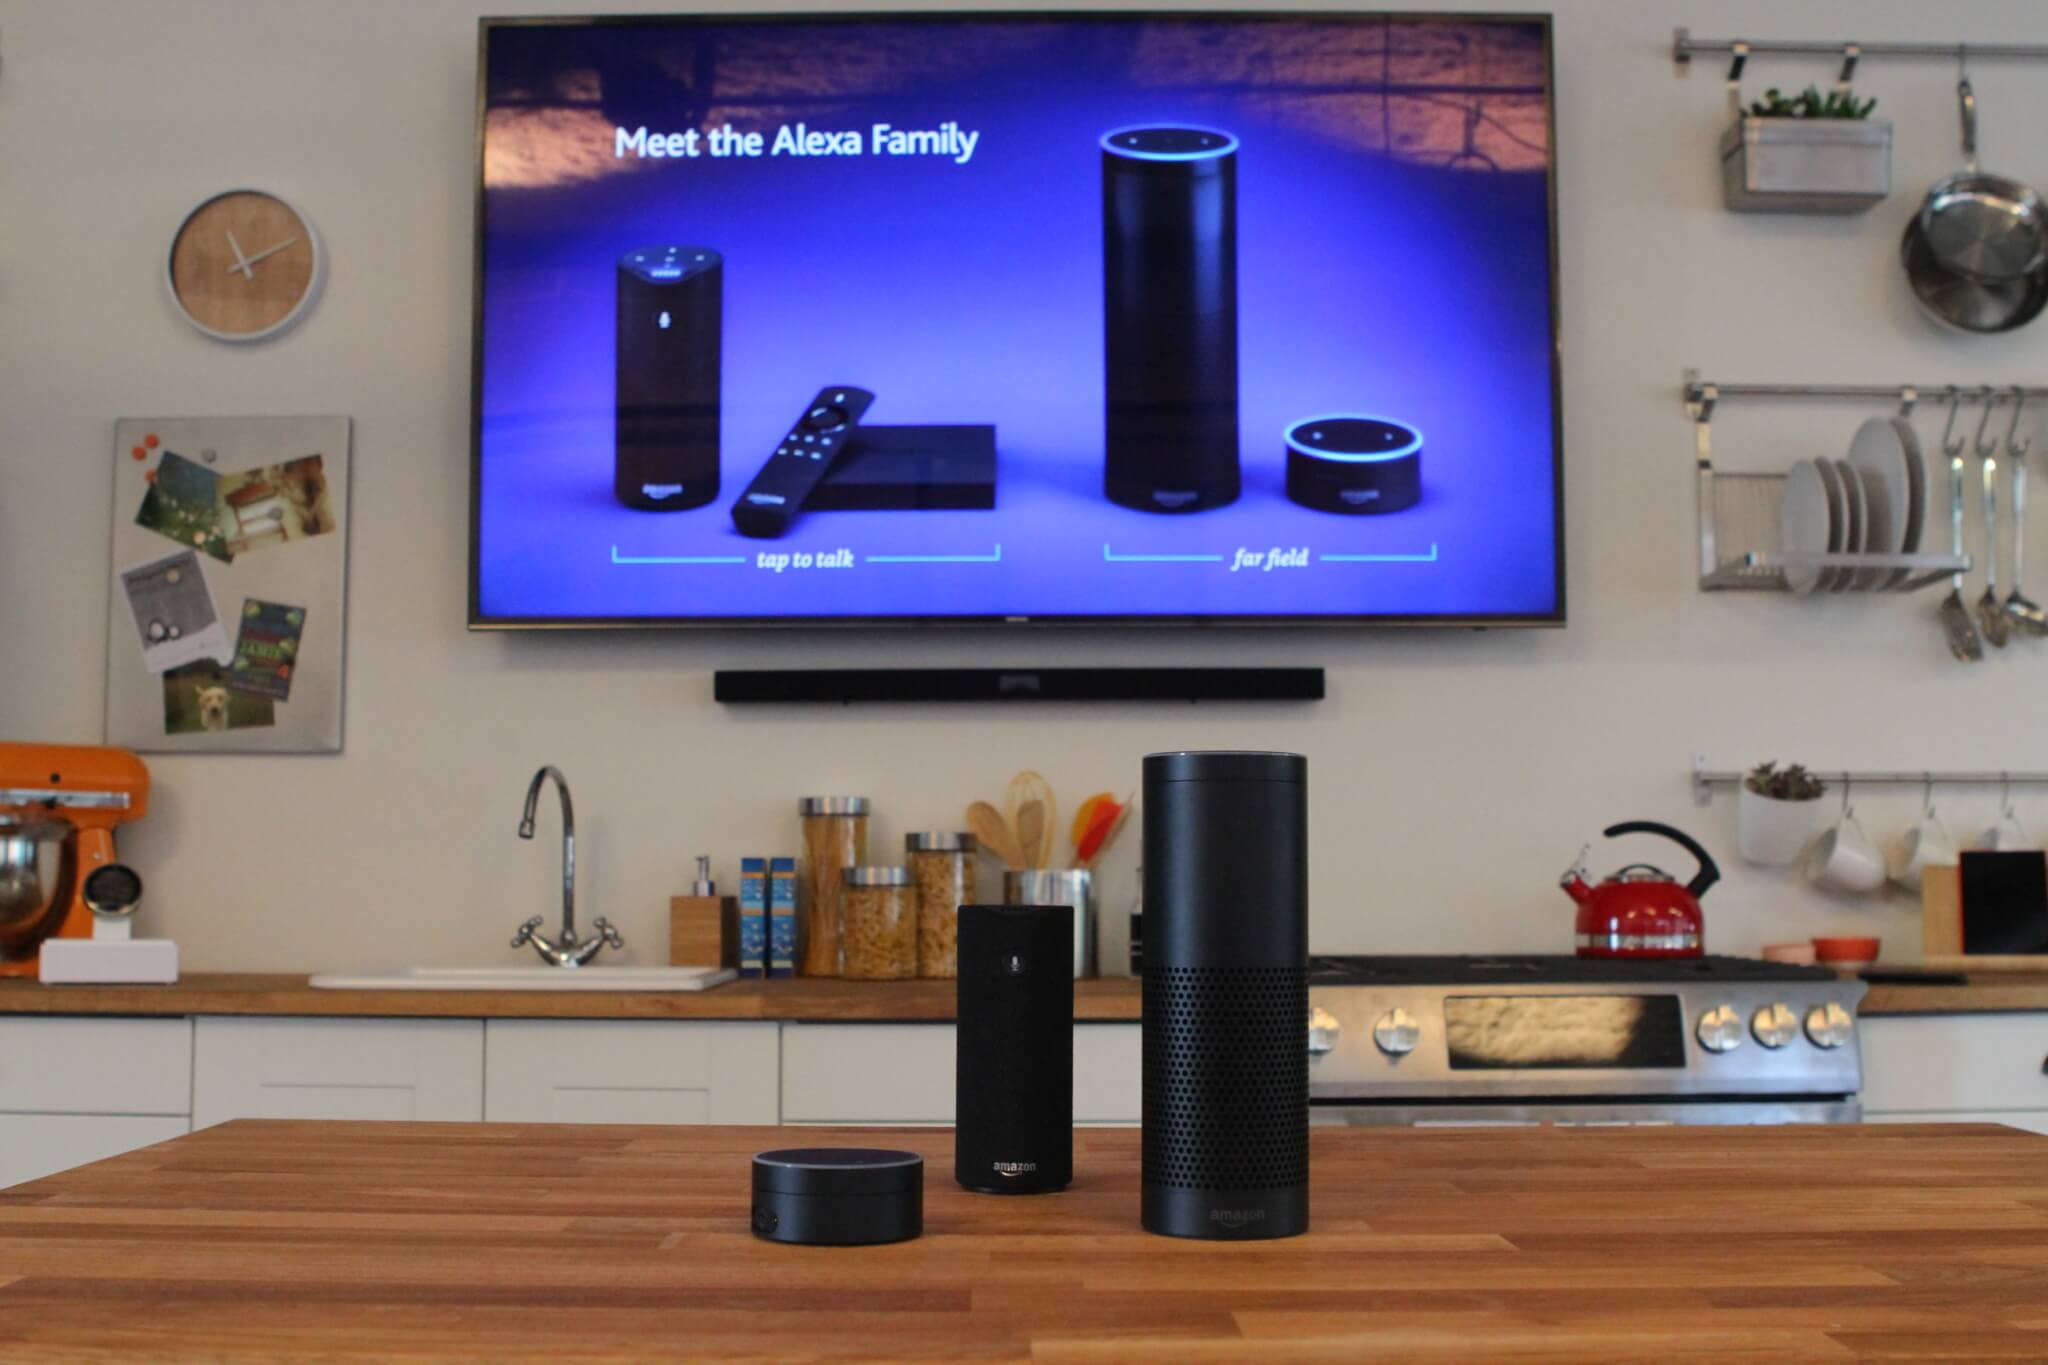 Amazon's family of Alexa-enabled devices